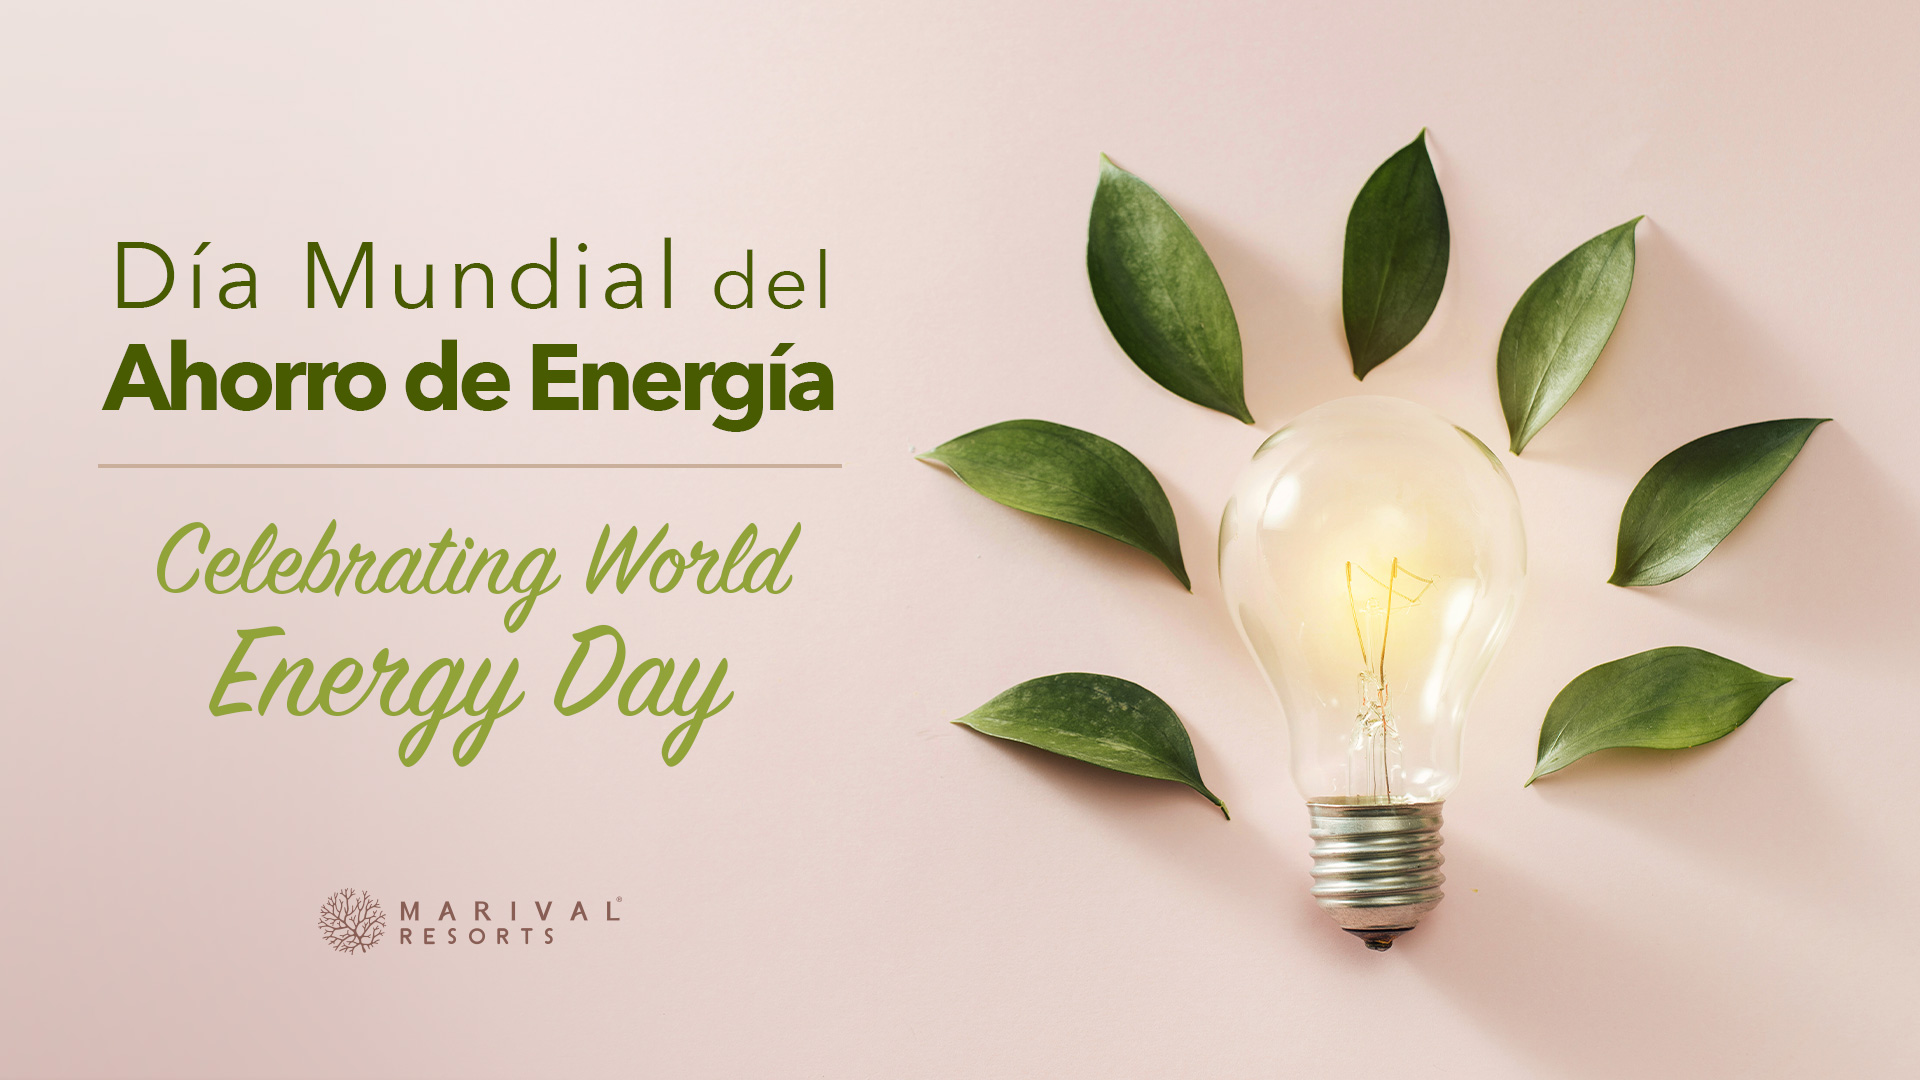 Celebrating World Energy Day at Marival Resorts